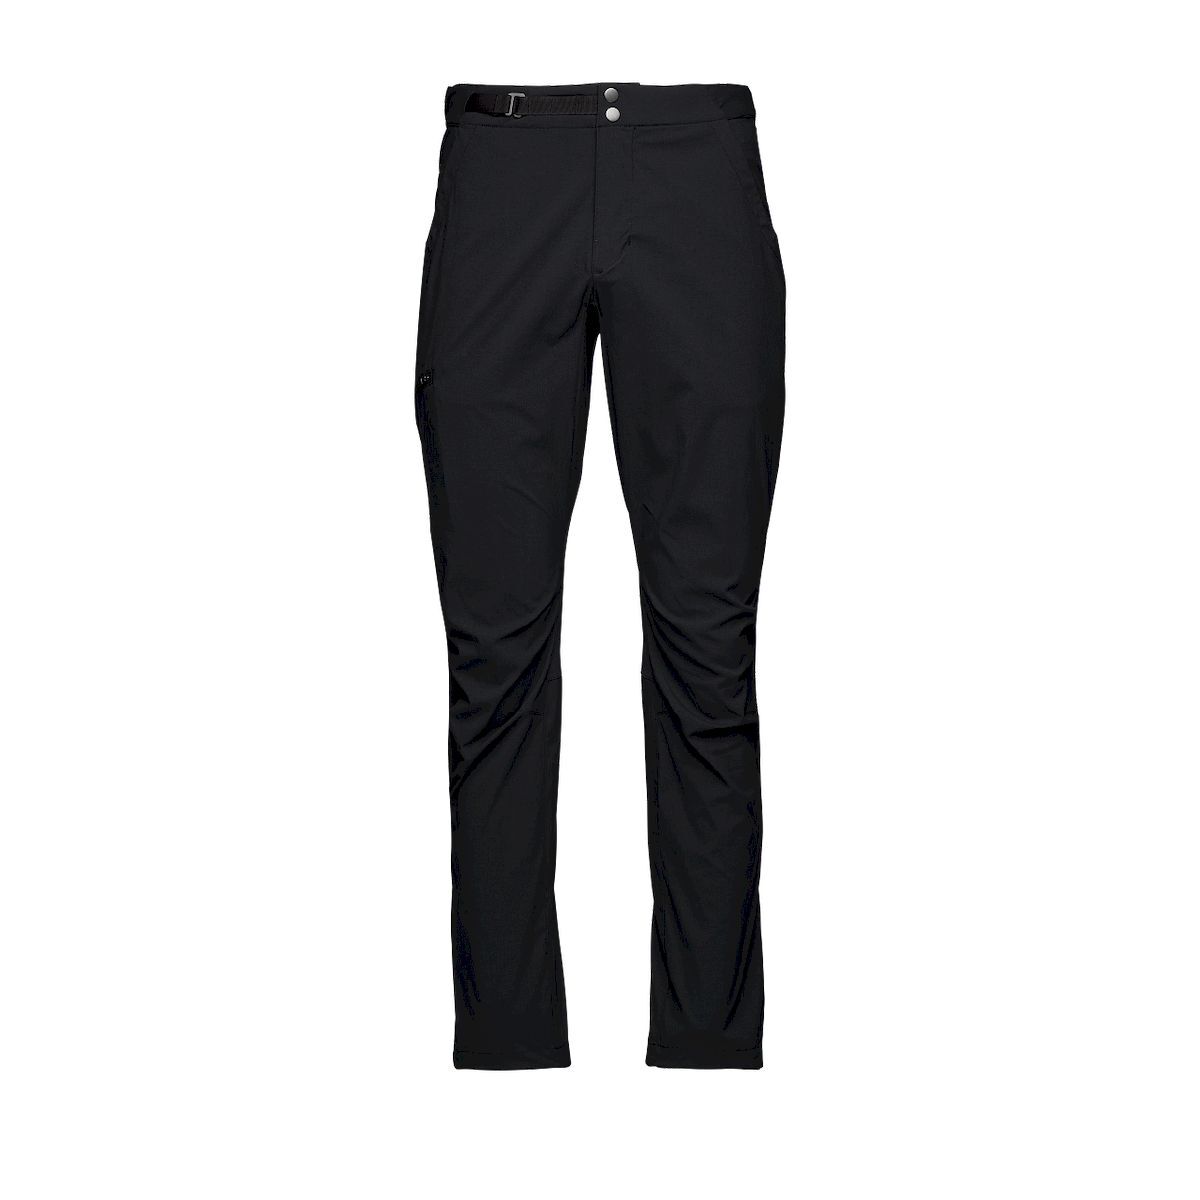 Black Diamond Technician Alpine Pants - Climbing trousers